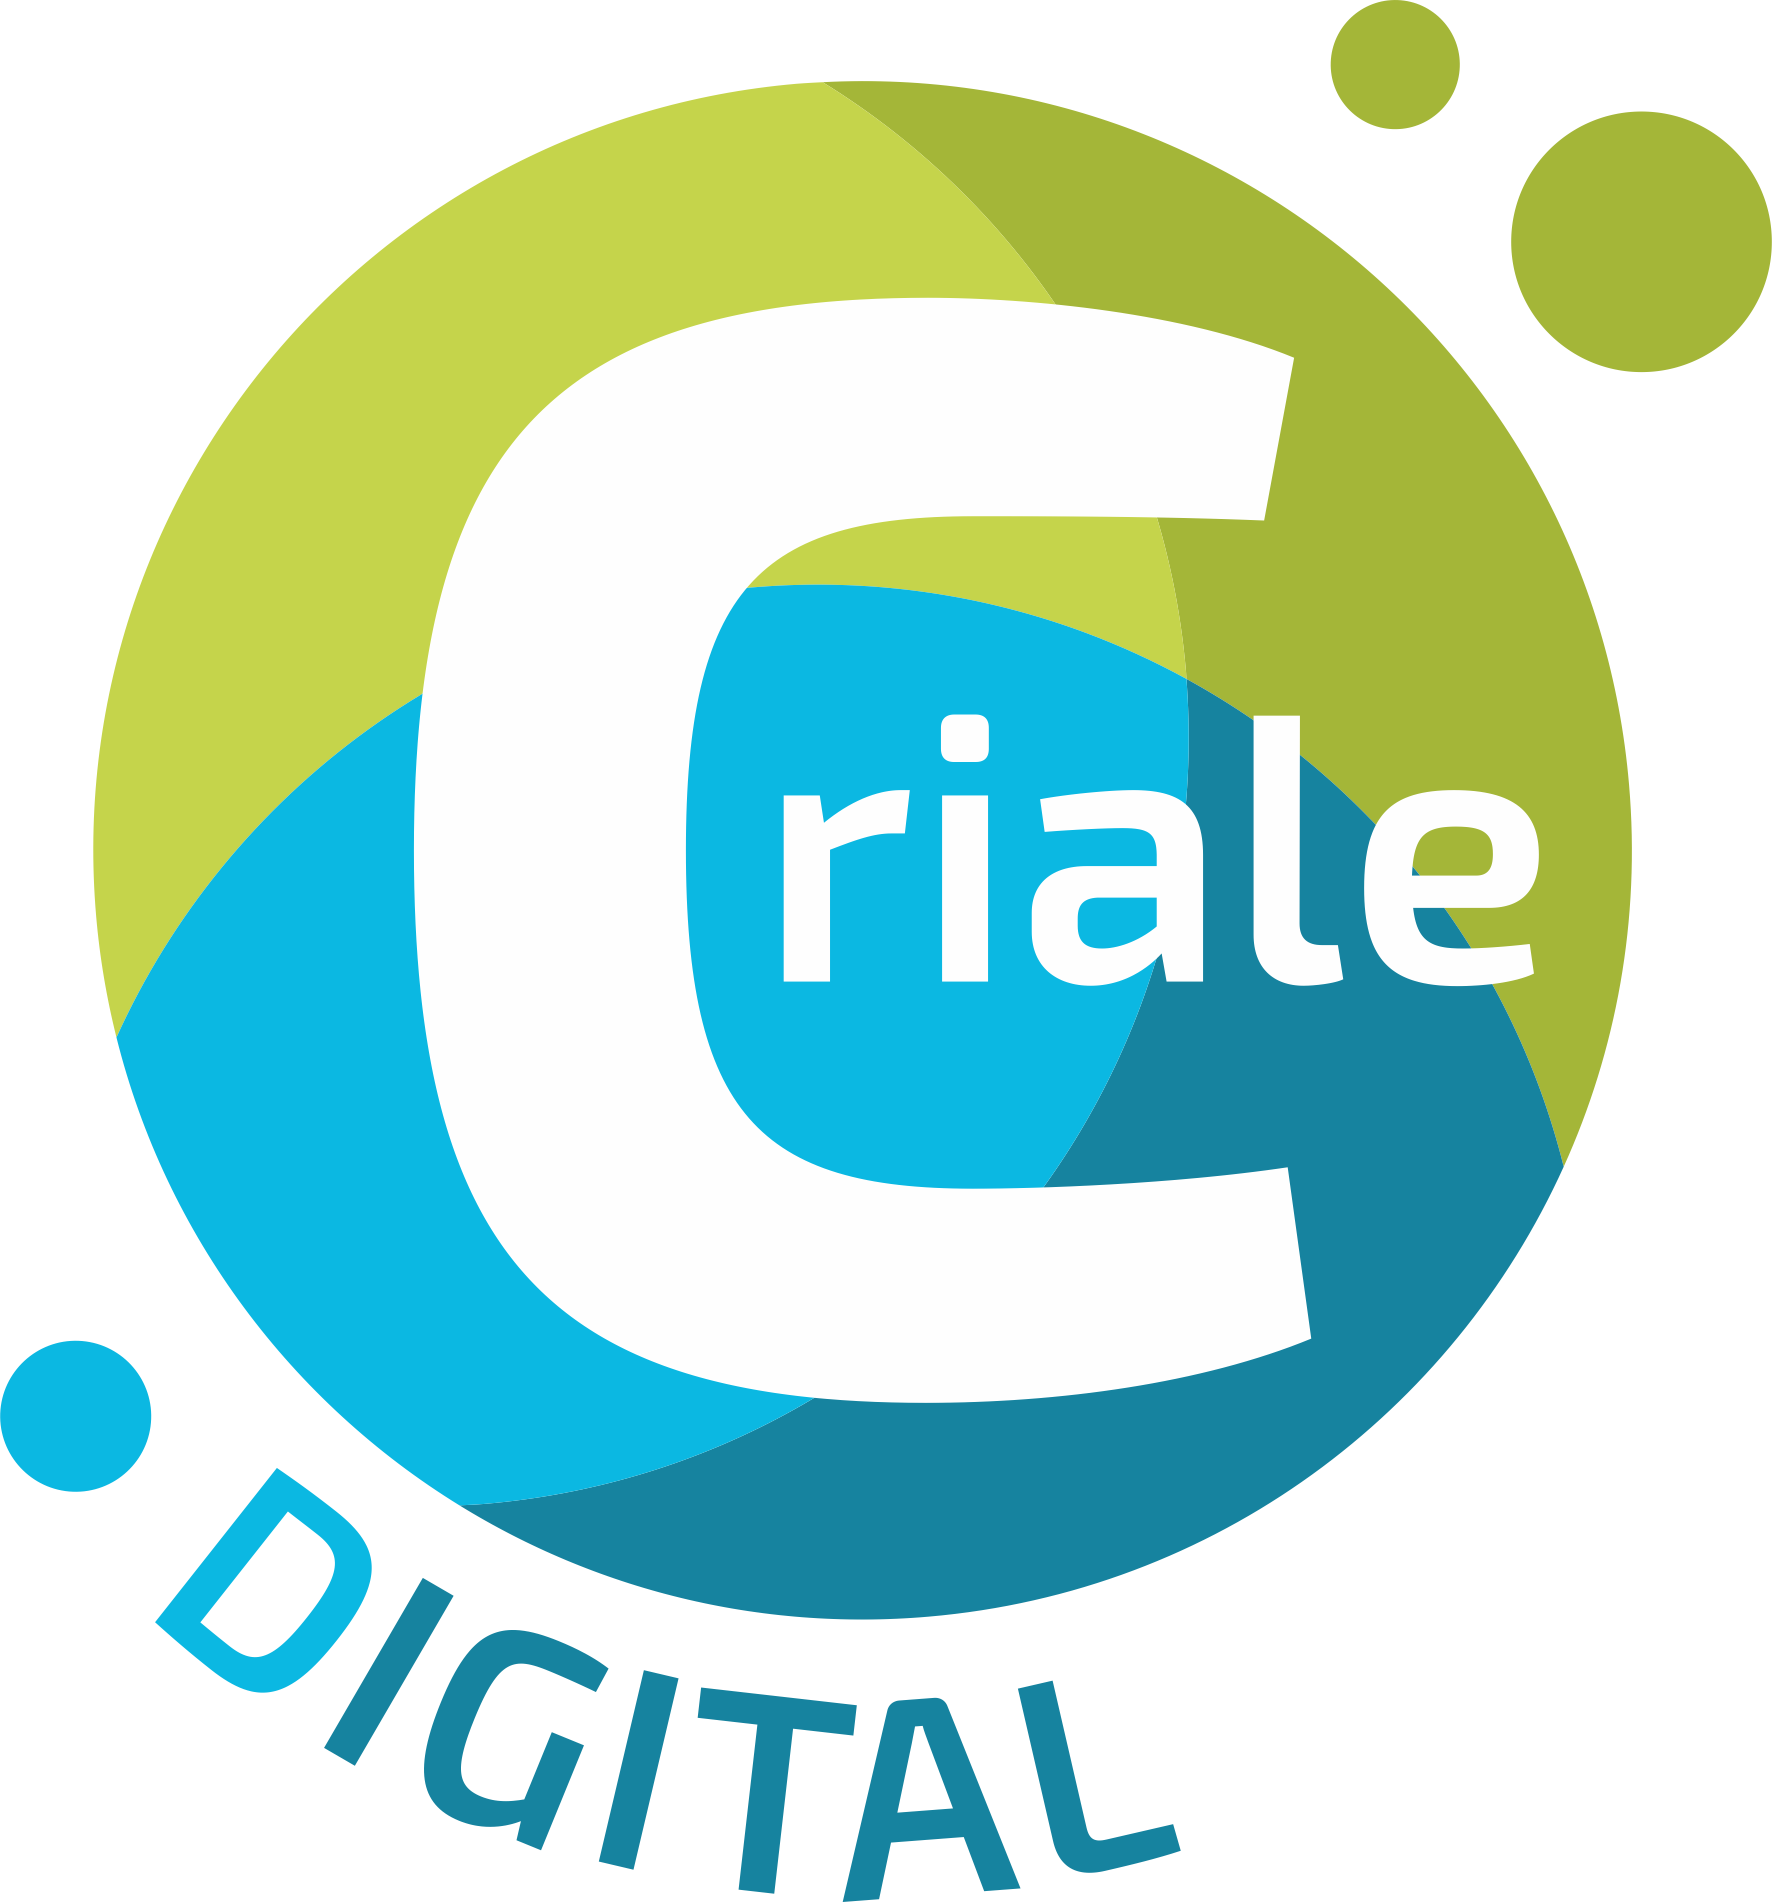 Criale Digital Logo